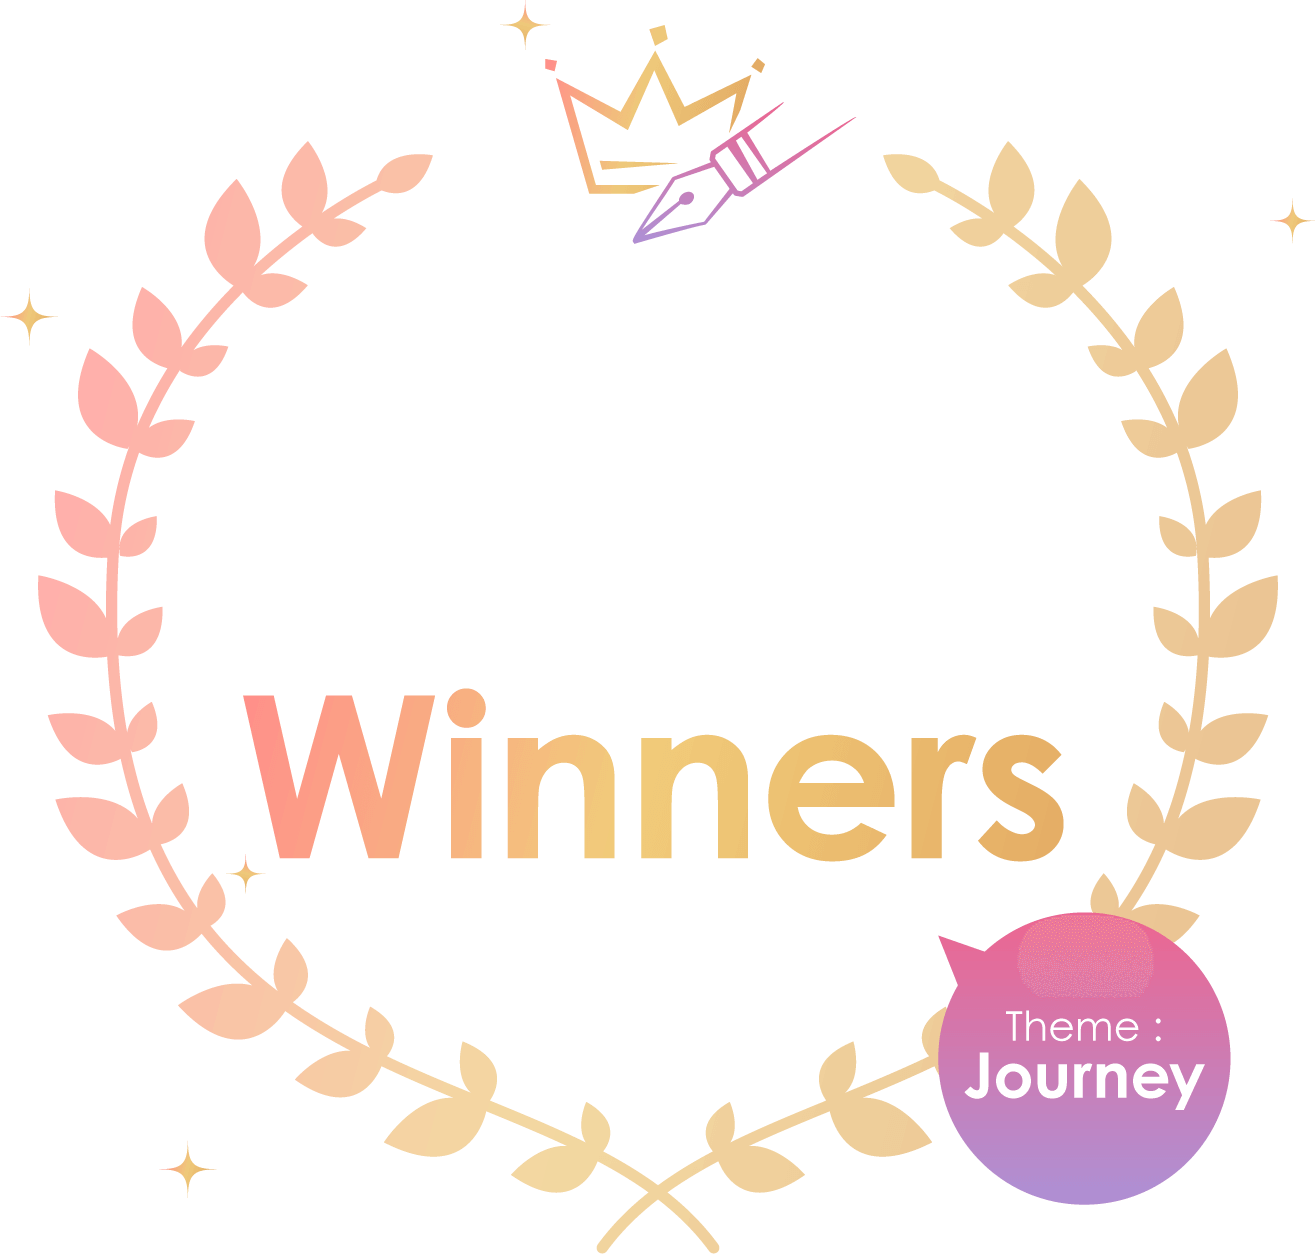 International Comic/Manga School Contest 2022